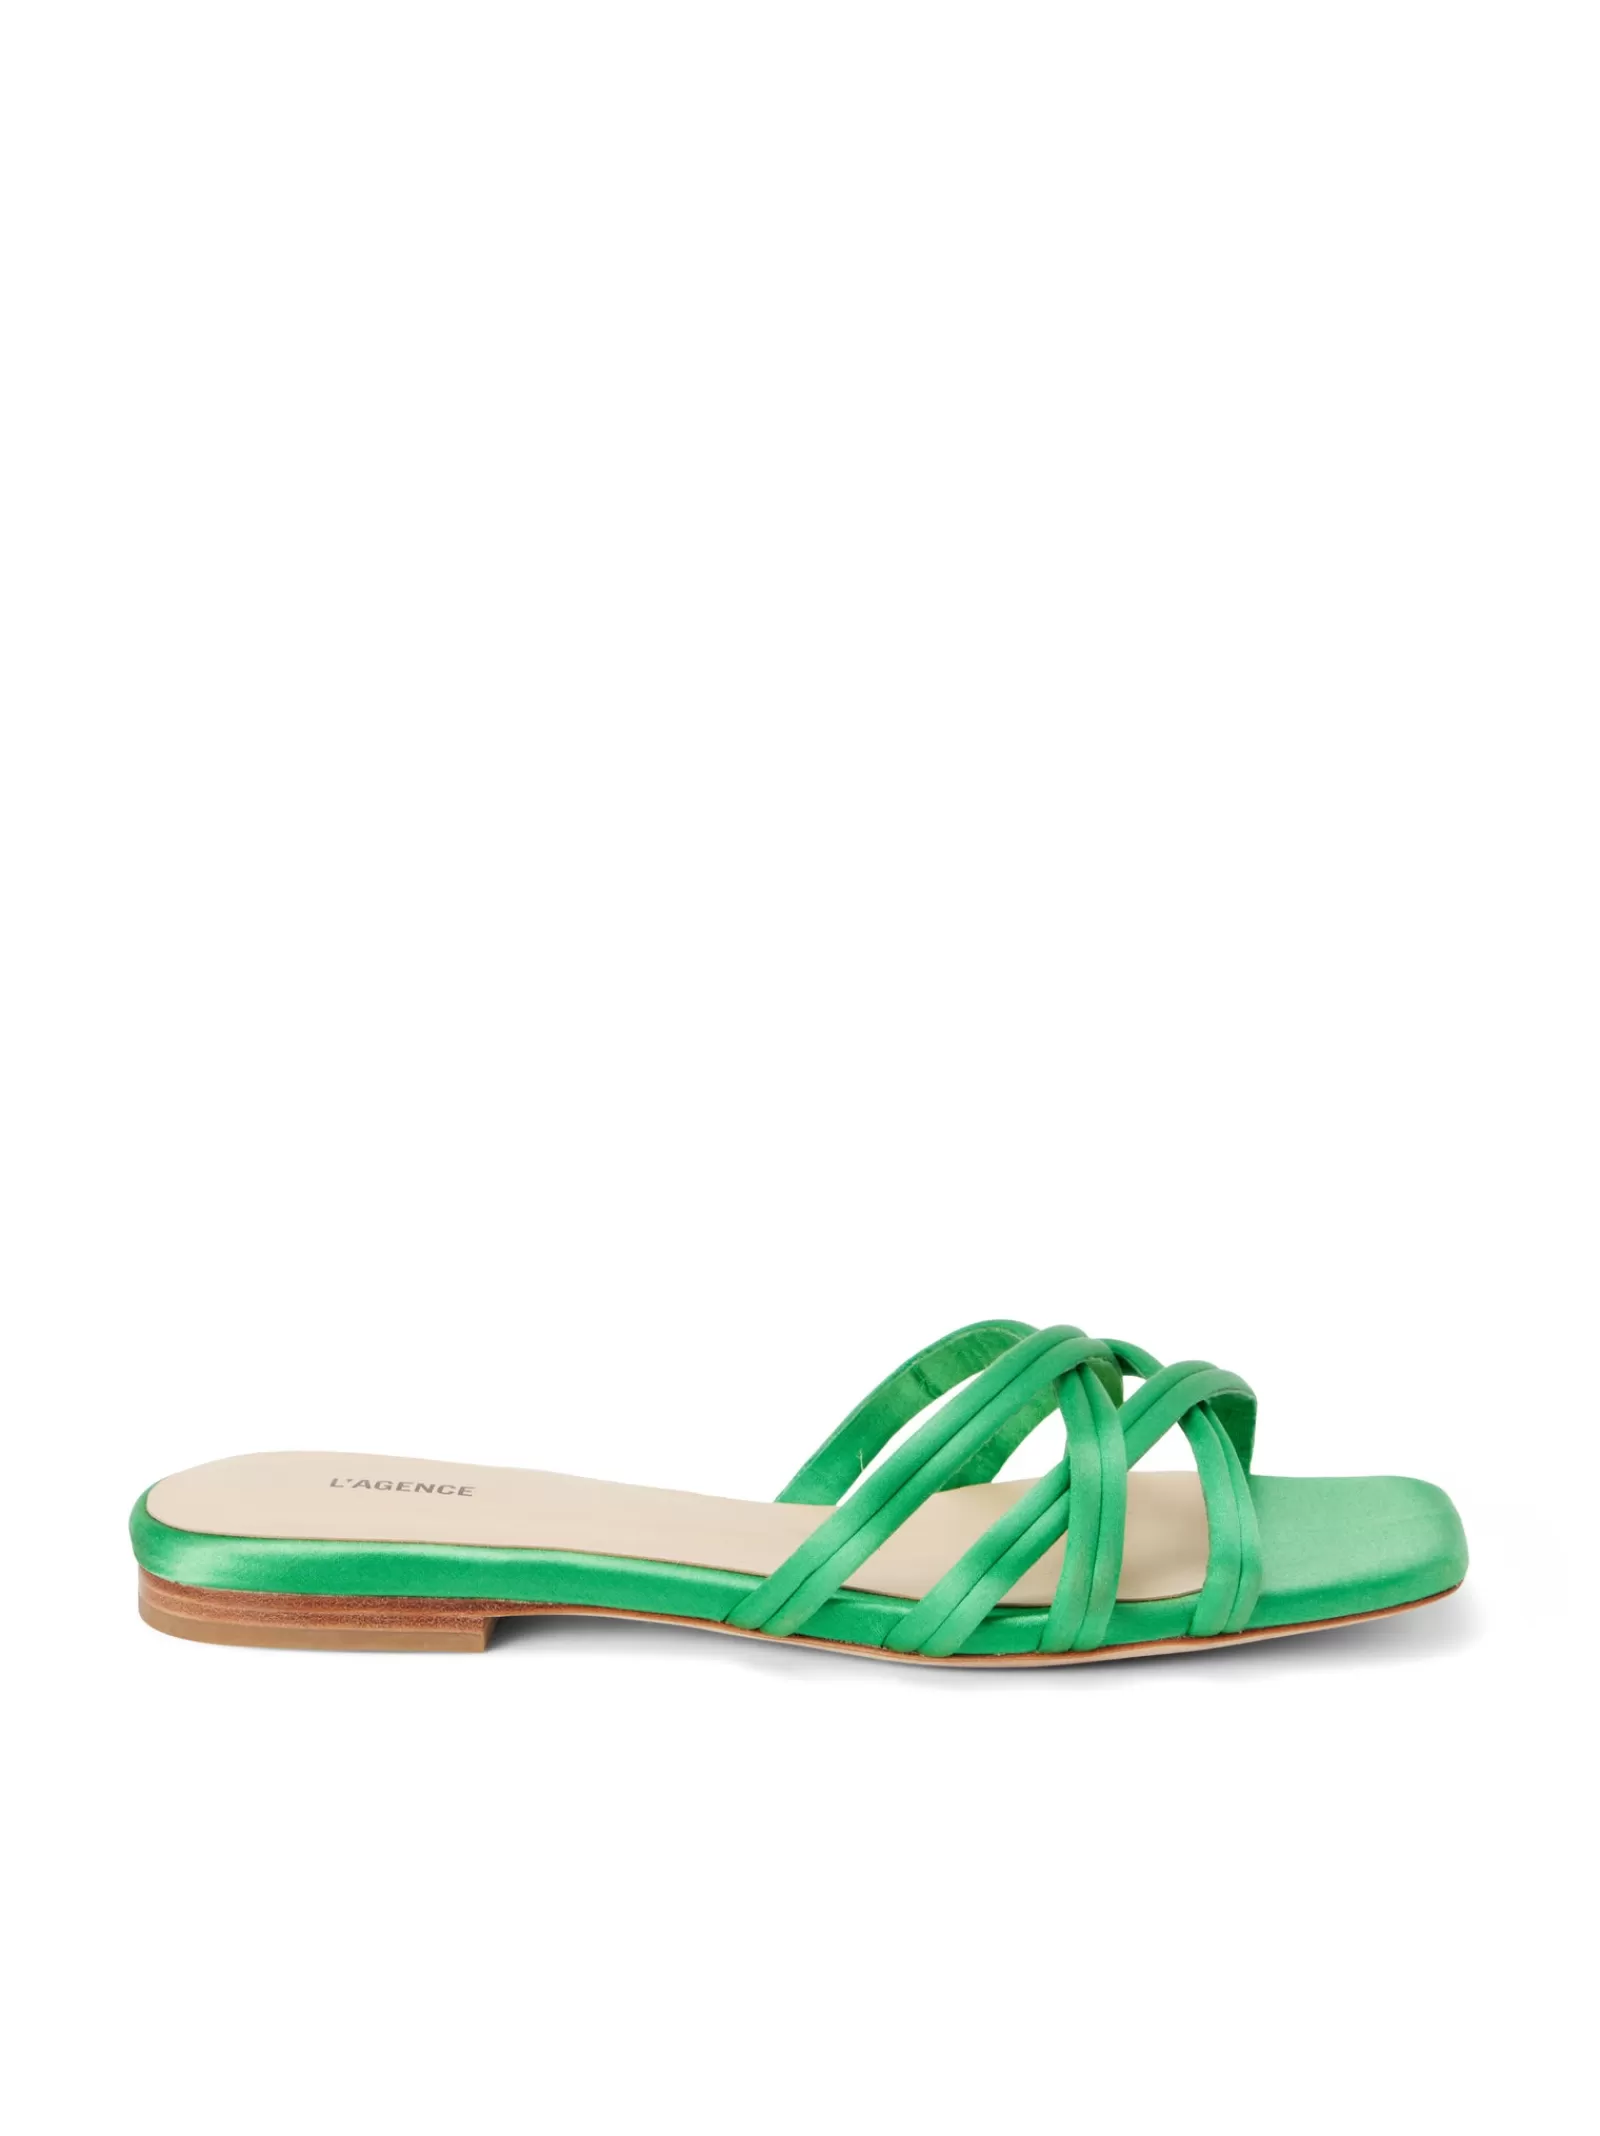 L'AGENCE Abelle Satin Flat Sandal< Spring Collection | Sandals & Wedges